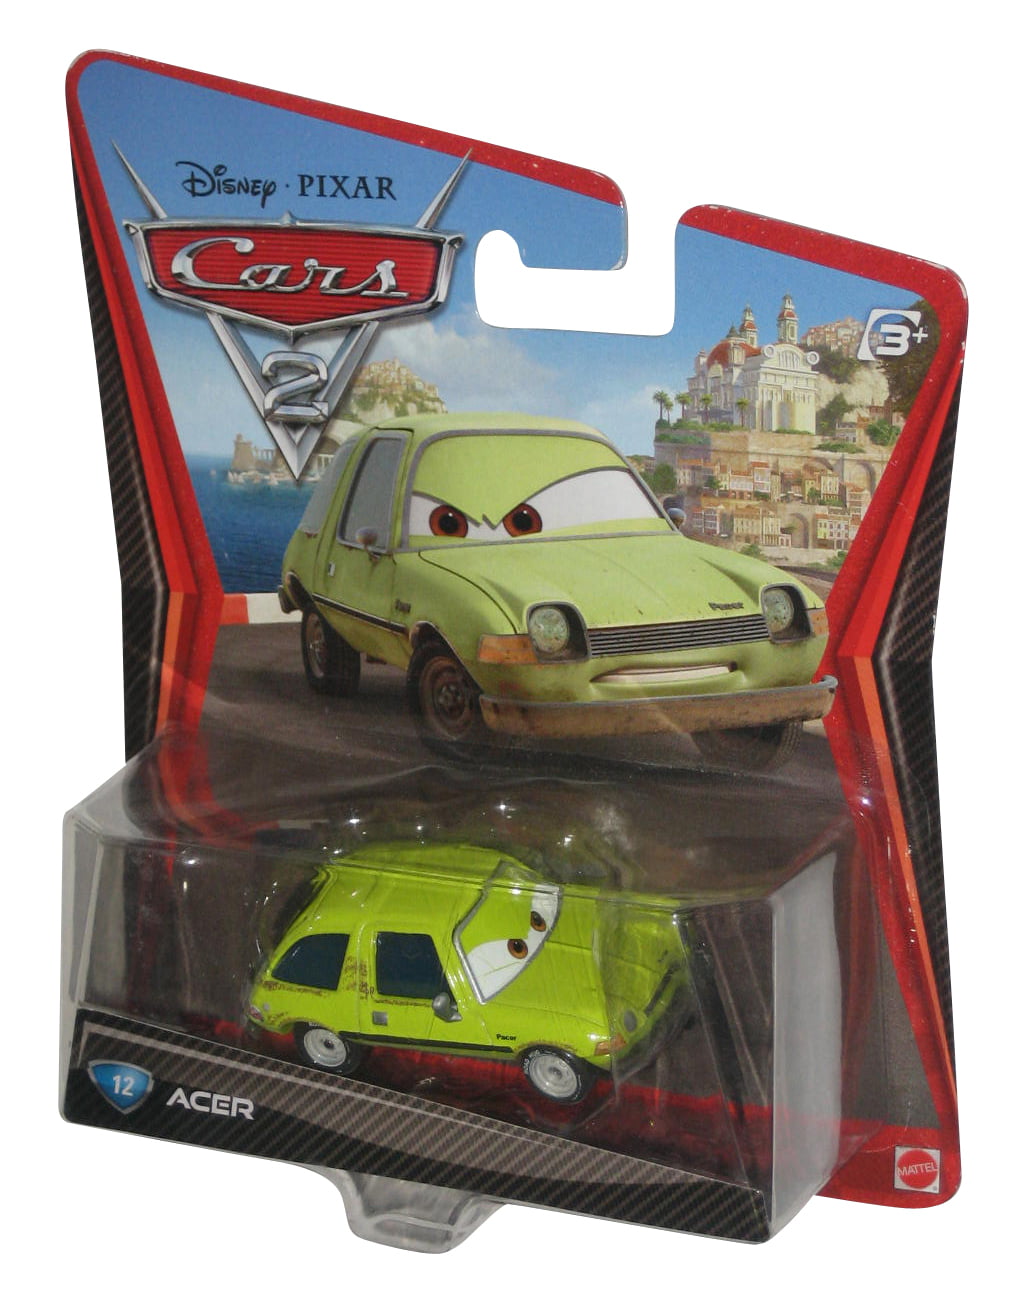 Disney Pixar Cars 2 Movie Acer 12 Die Cast Mattel Vehicle Toy Car